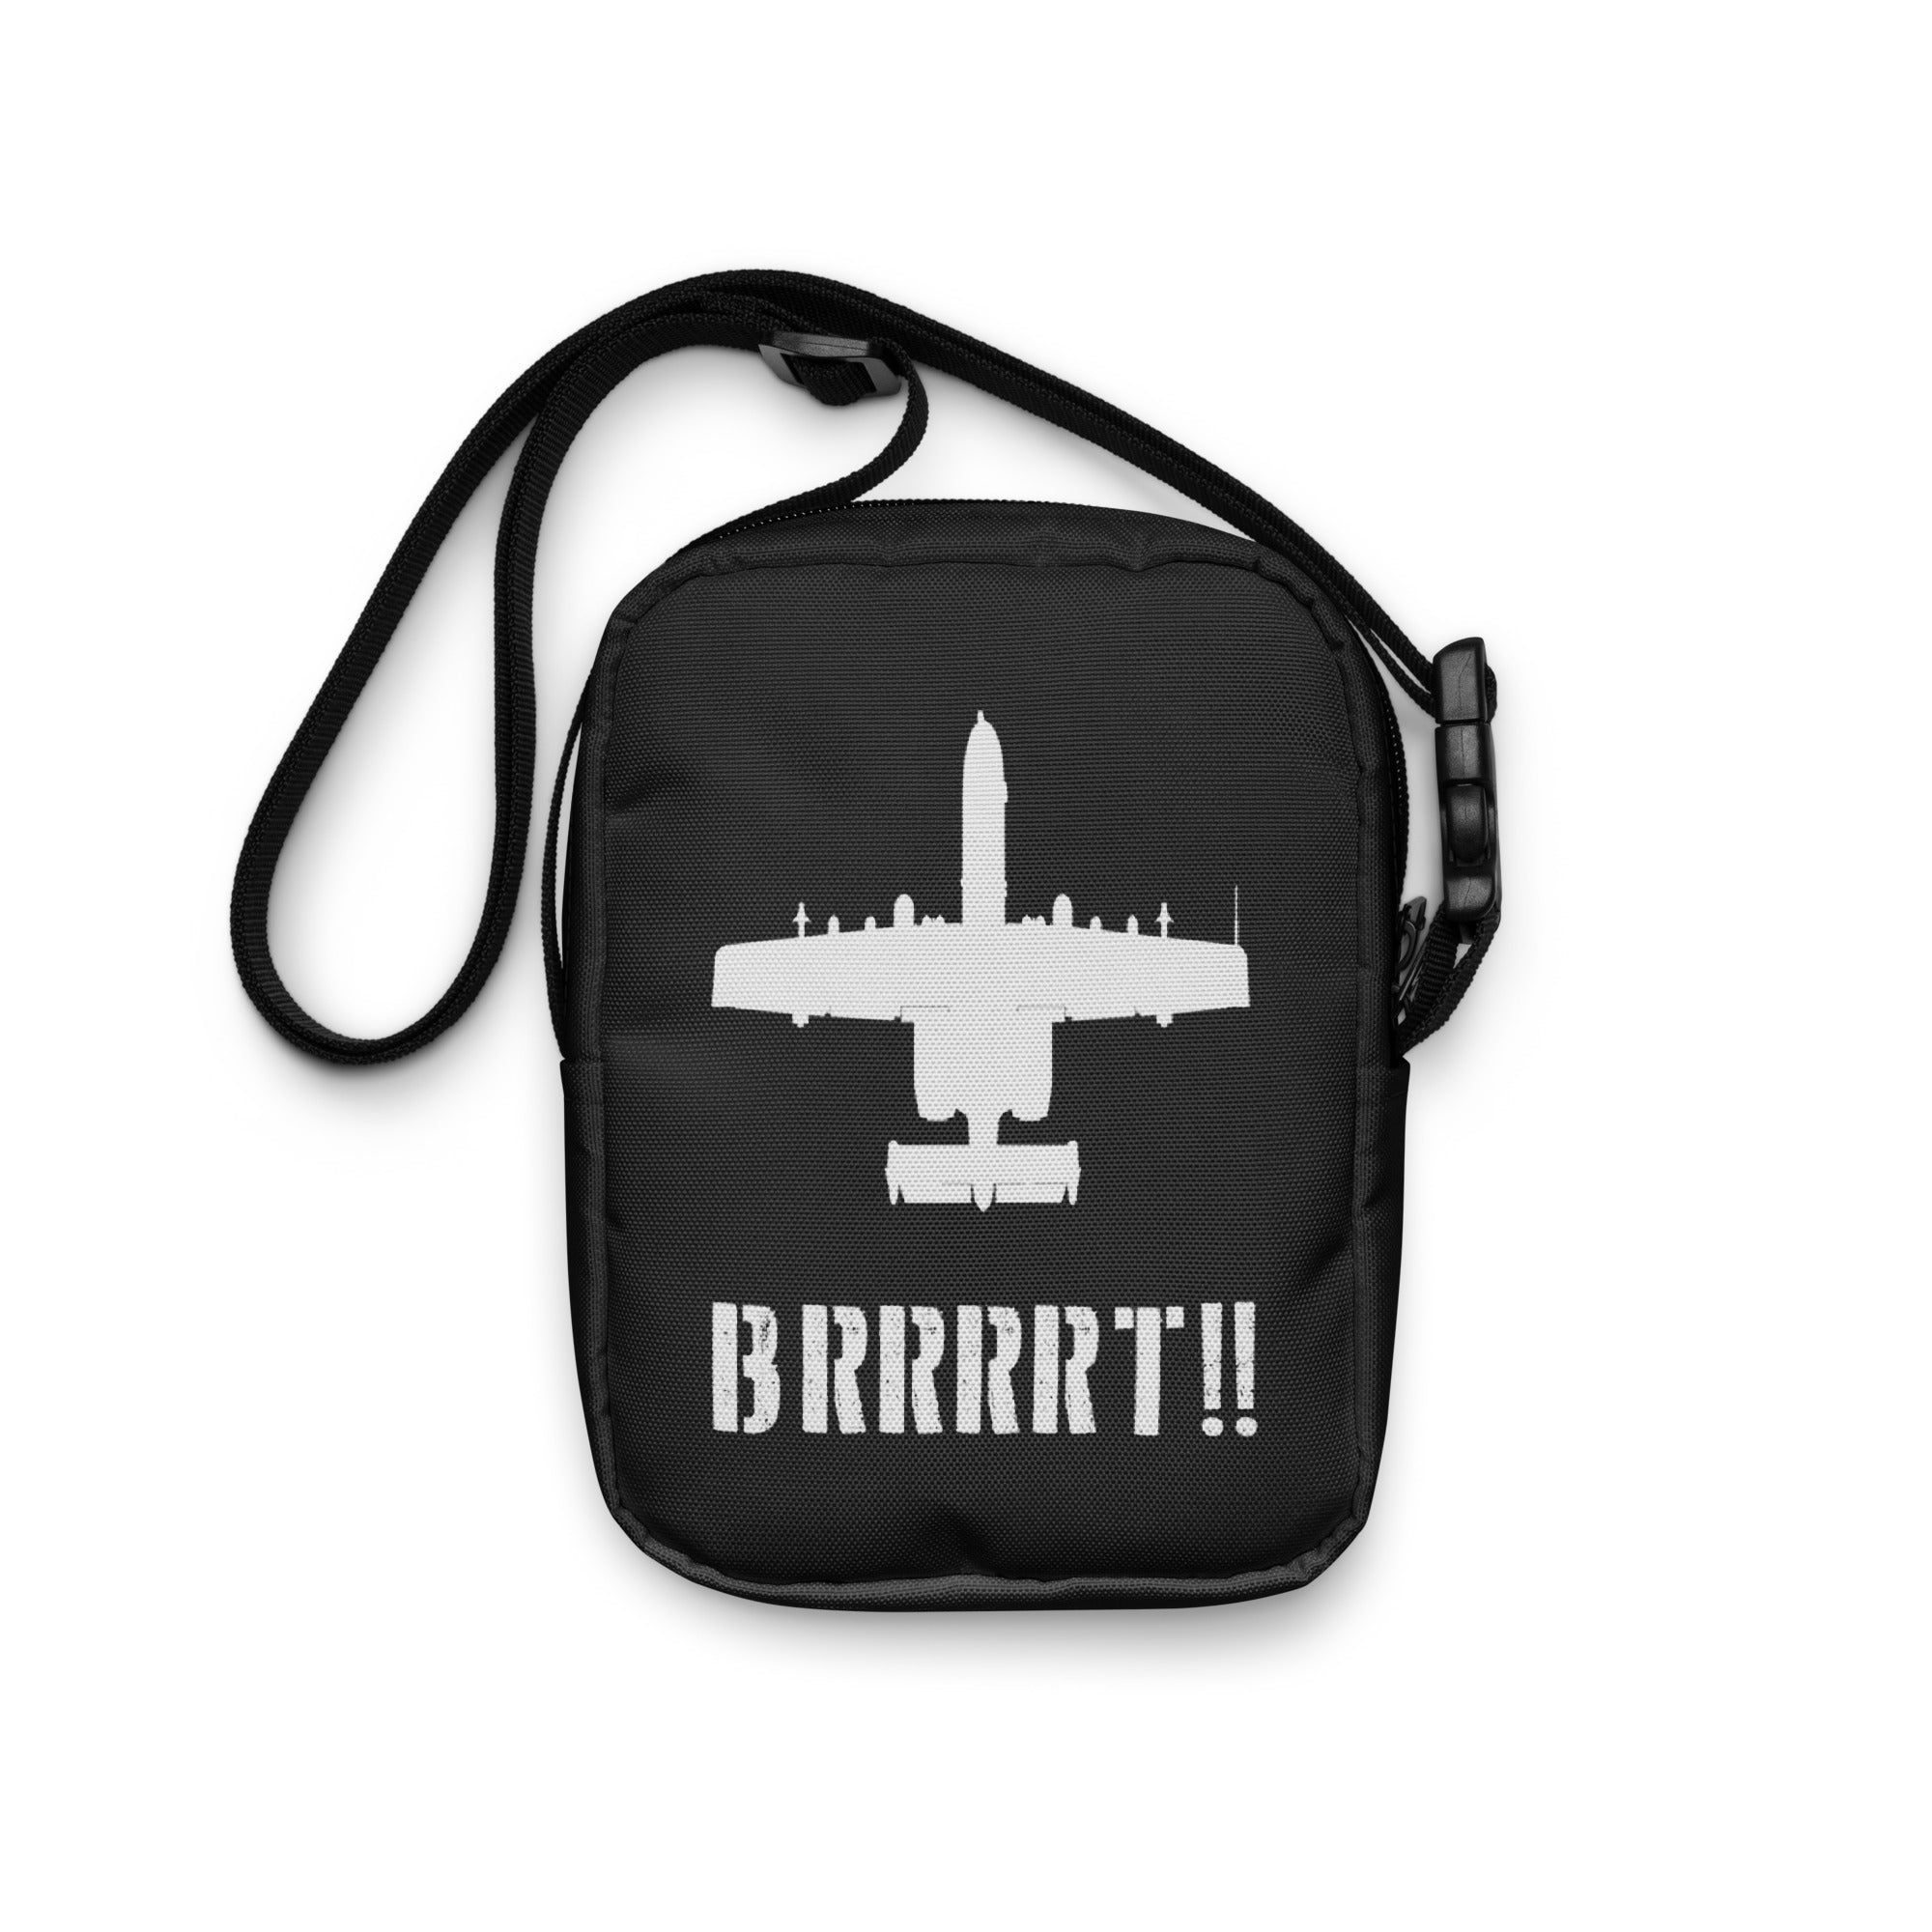 A-10 "Blacksnakes" Utility crossbody bag - I Love a Hangar